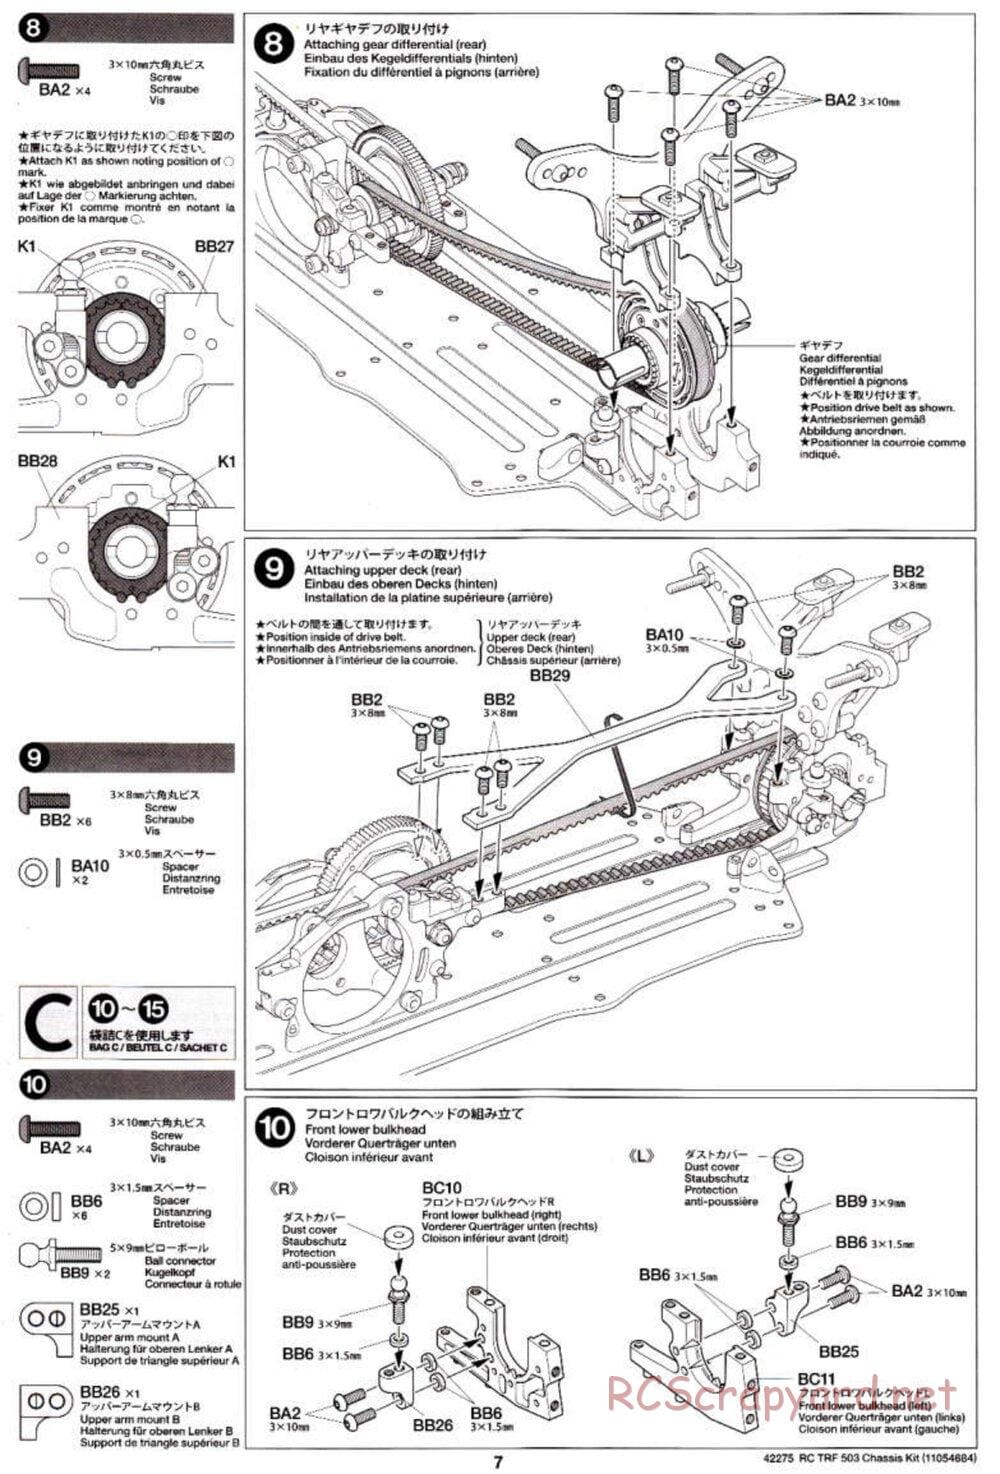 Tamiya - TRF503 Chassis - Manual - Page 7